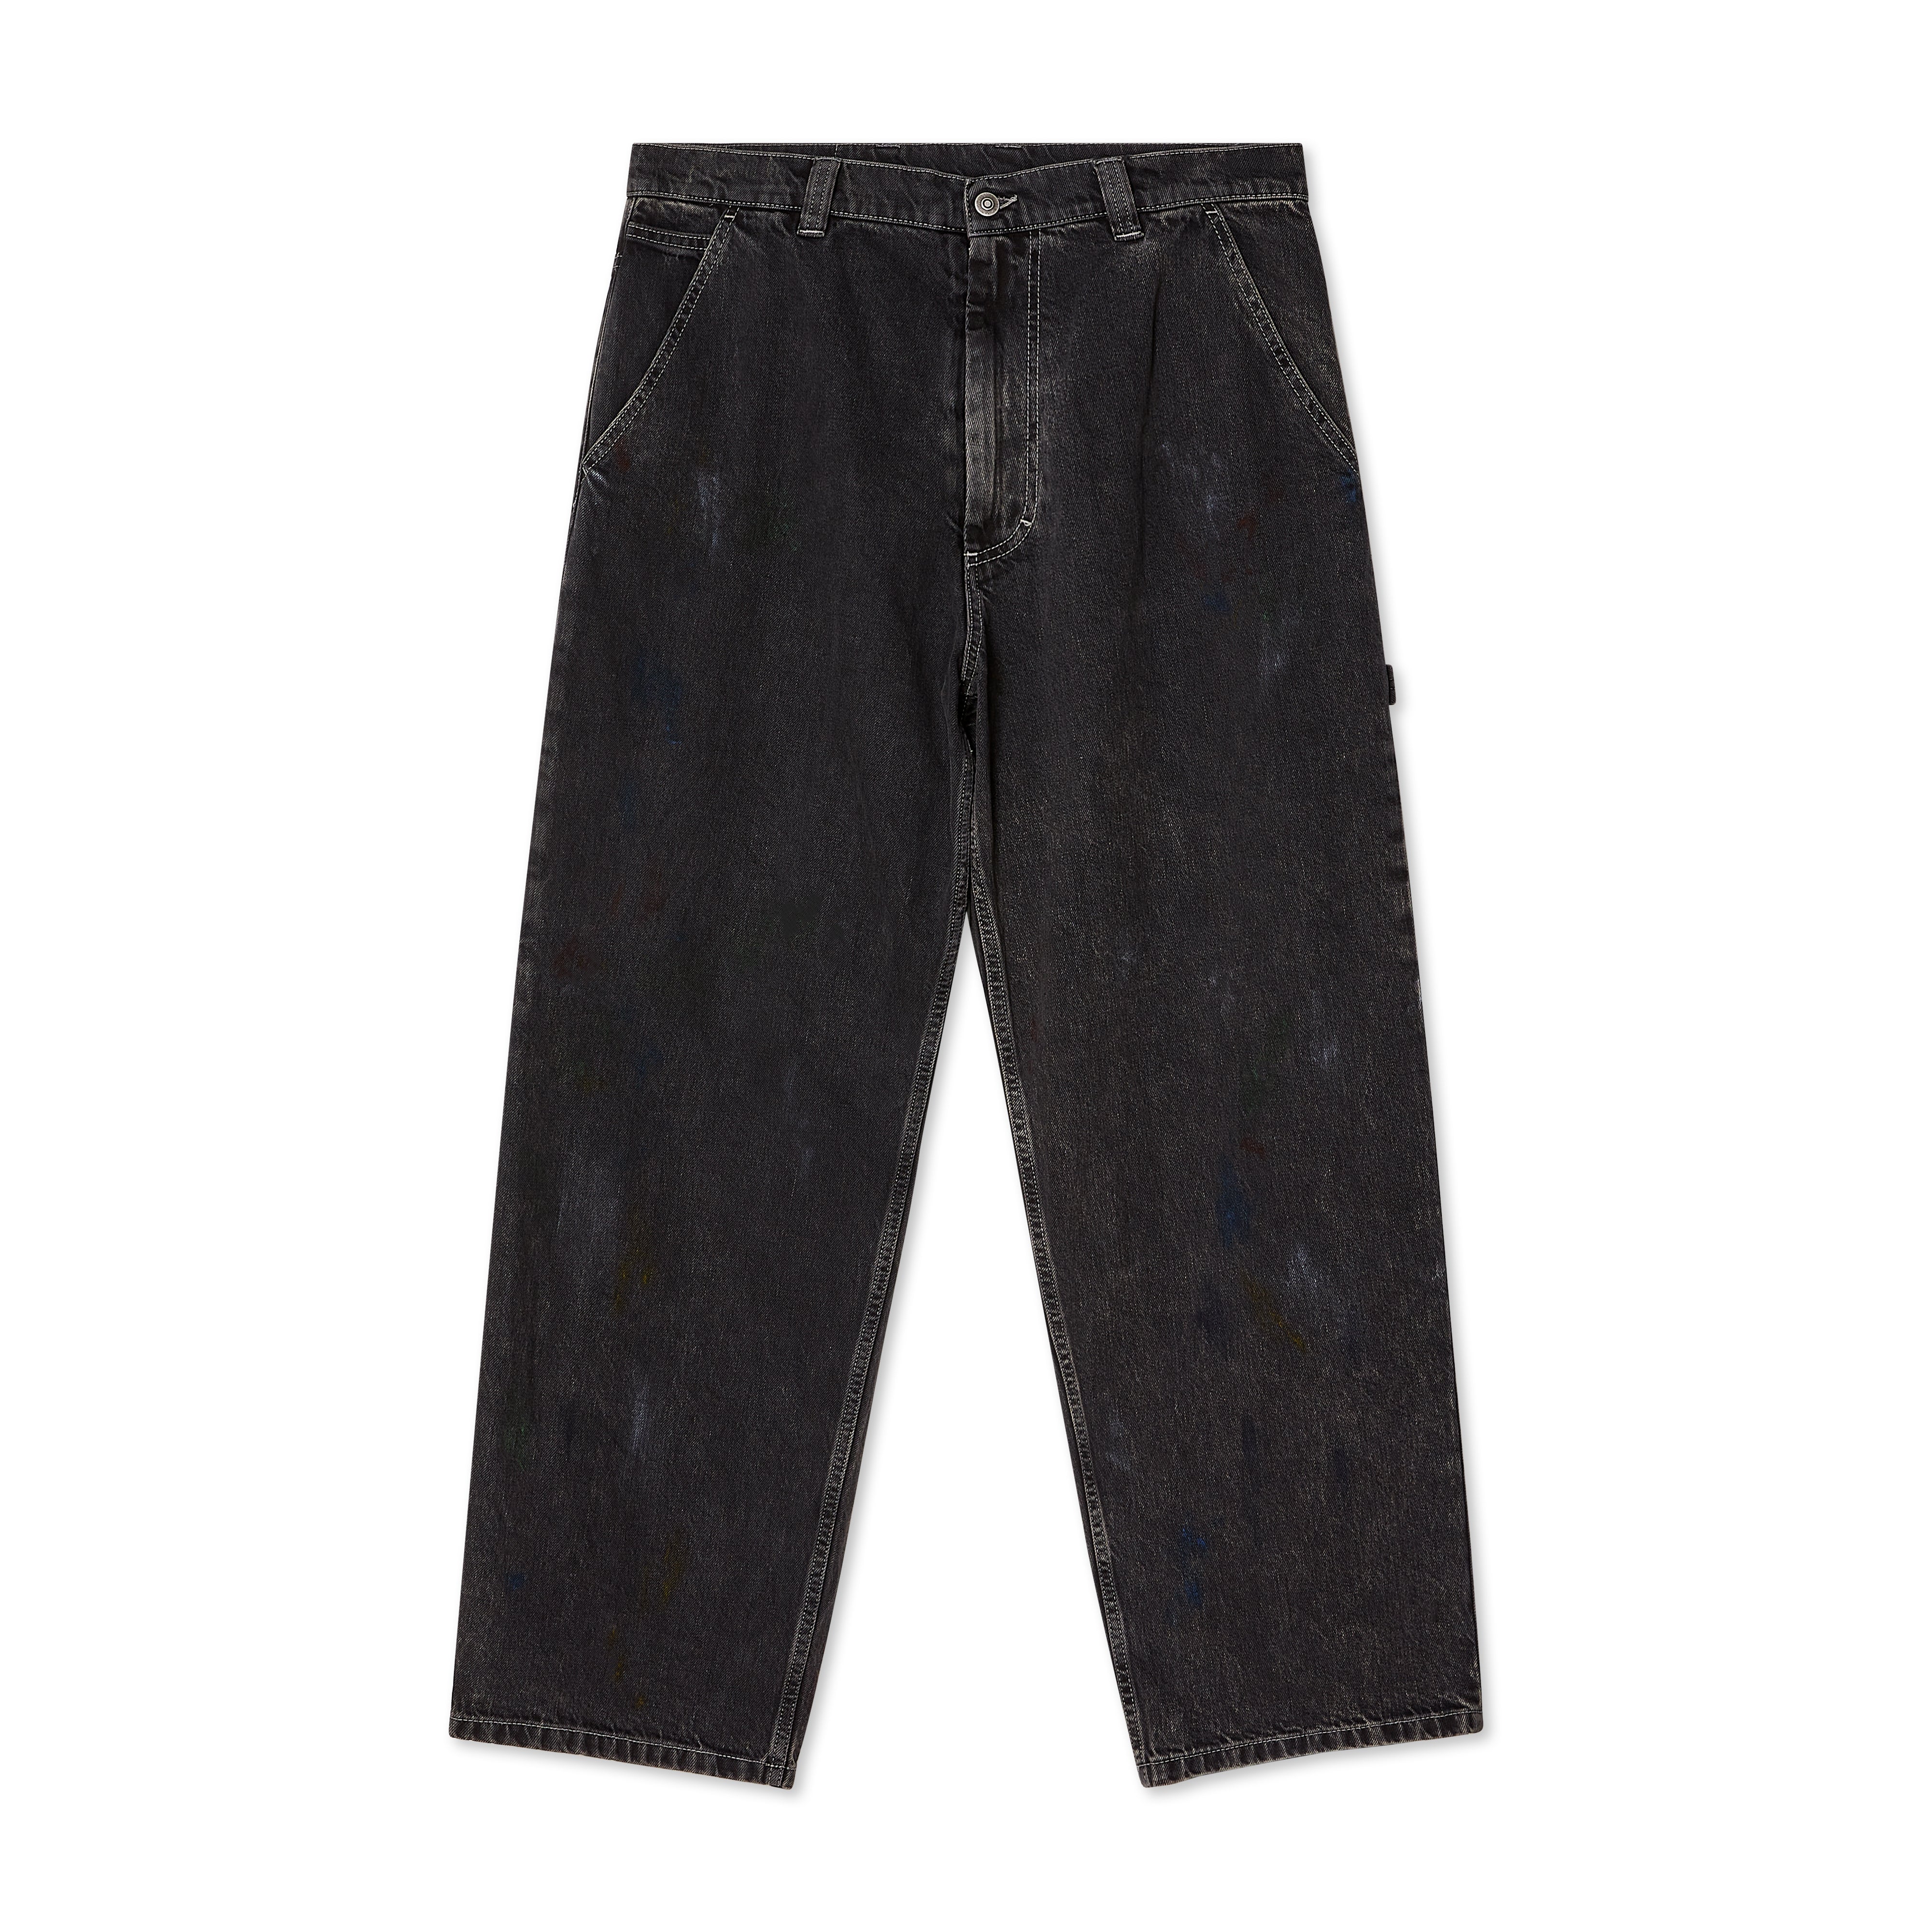 Maison Margiela - Men's 5 Pocket Paint Jeans - (Washed Black